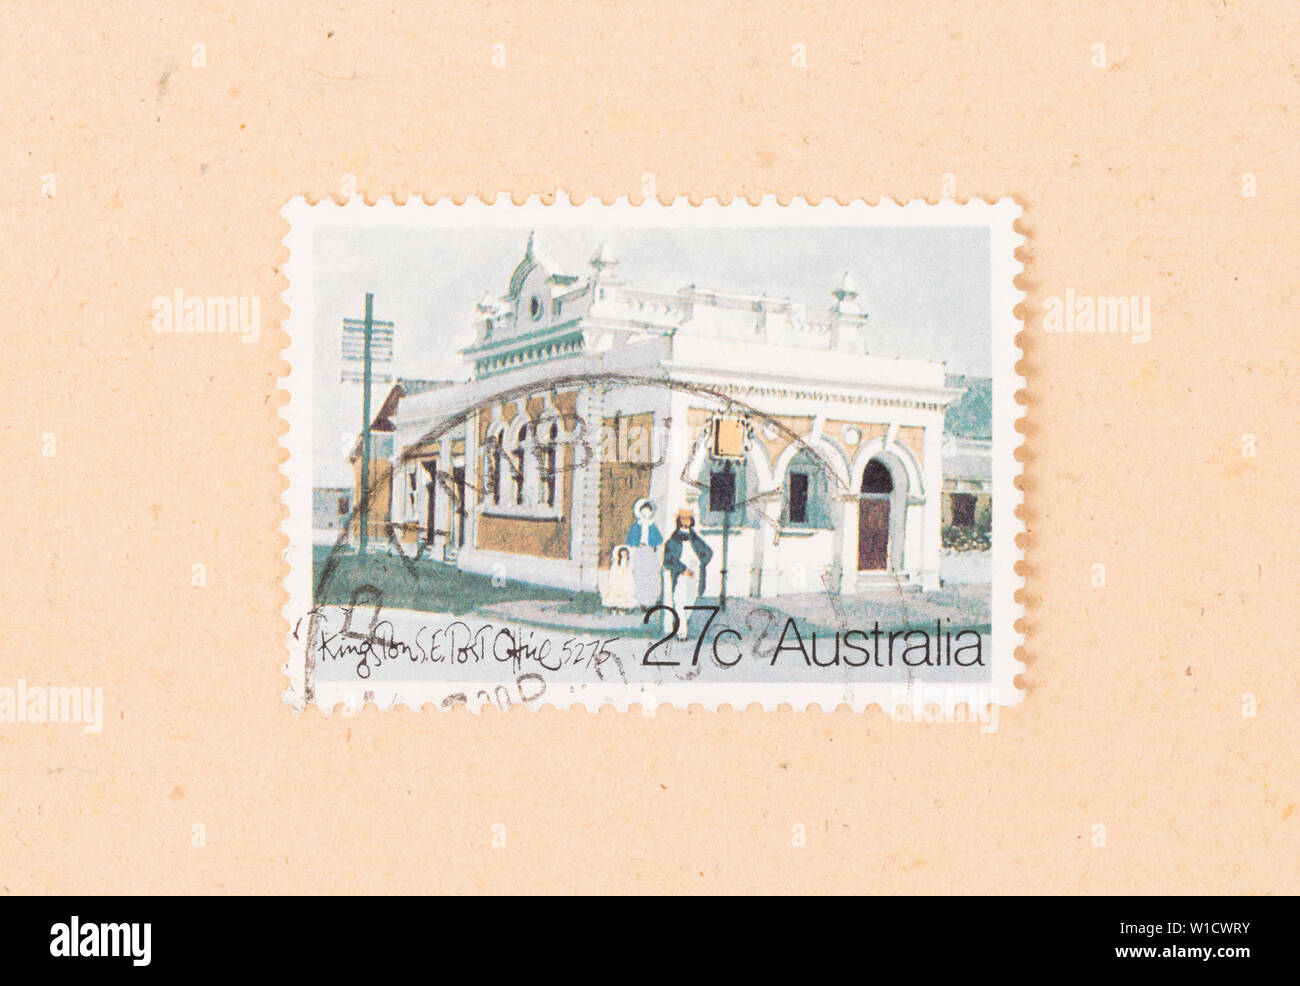 AUSTRALIA - CIRCA 1980: A stamp printed in Australia shows Kingston Post Office, circa 1980 Stock Photo